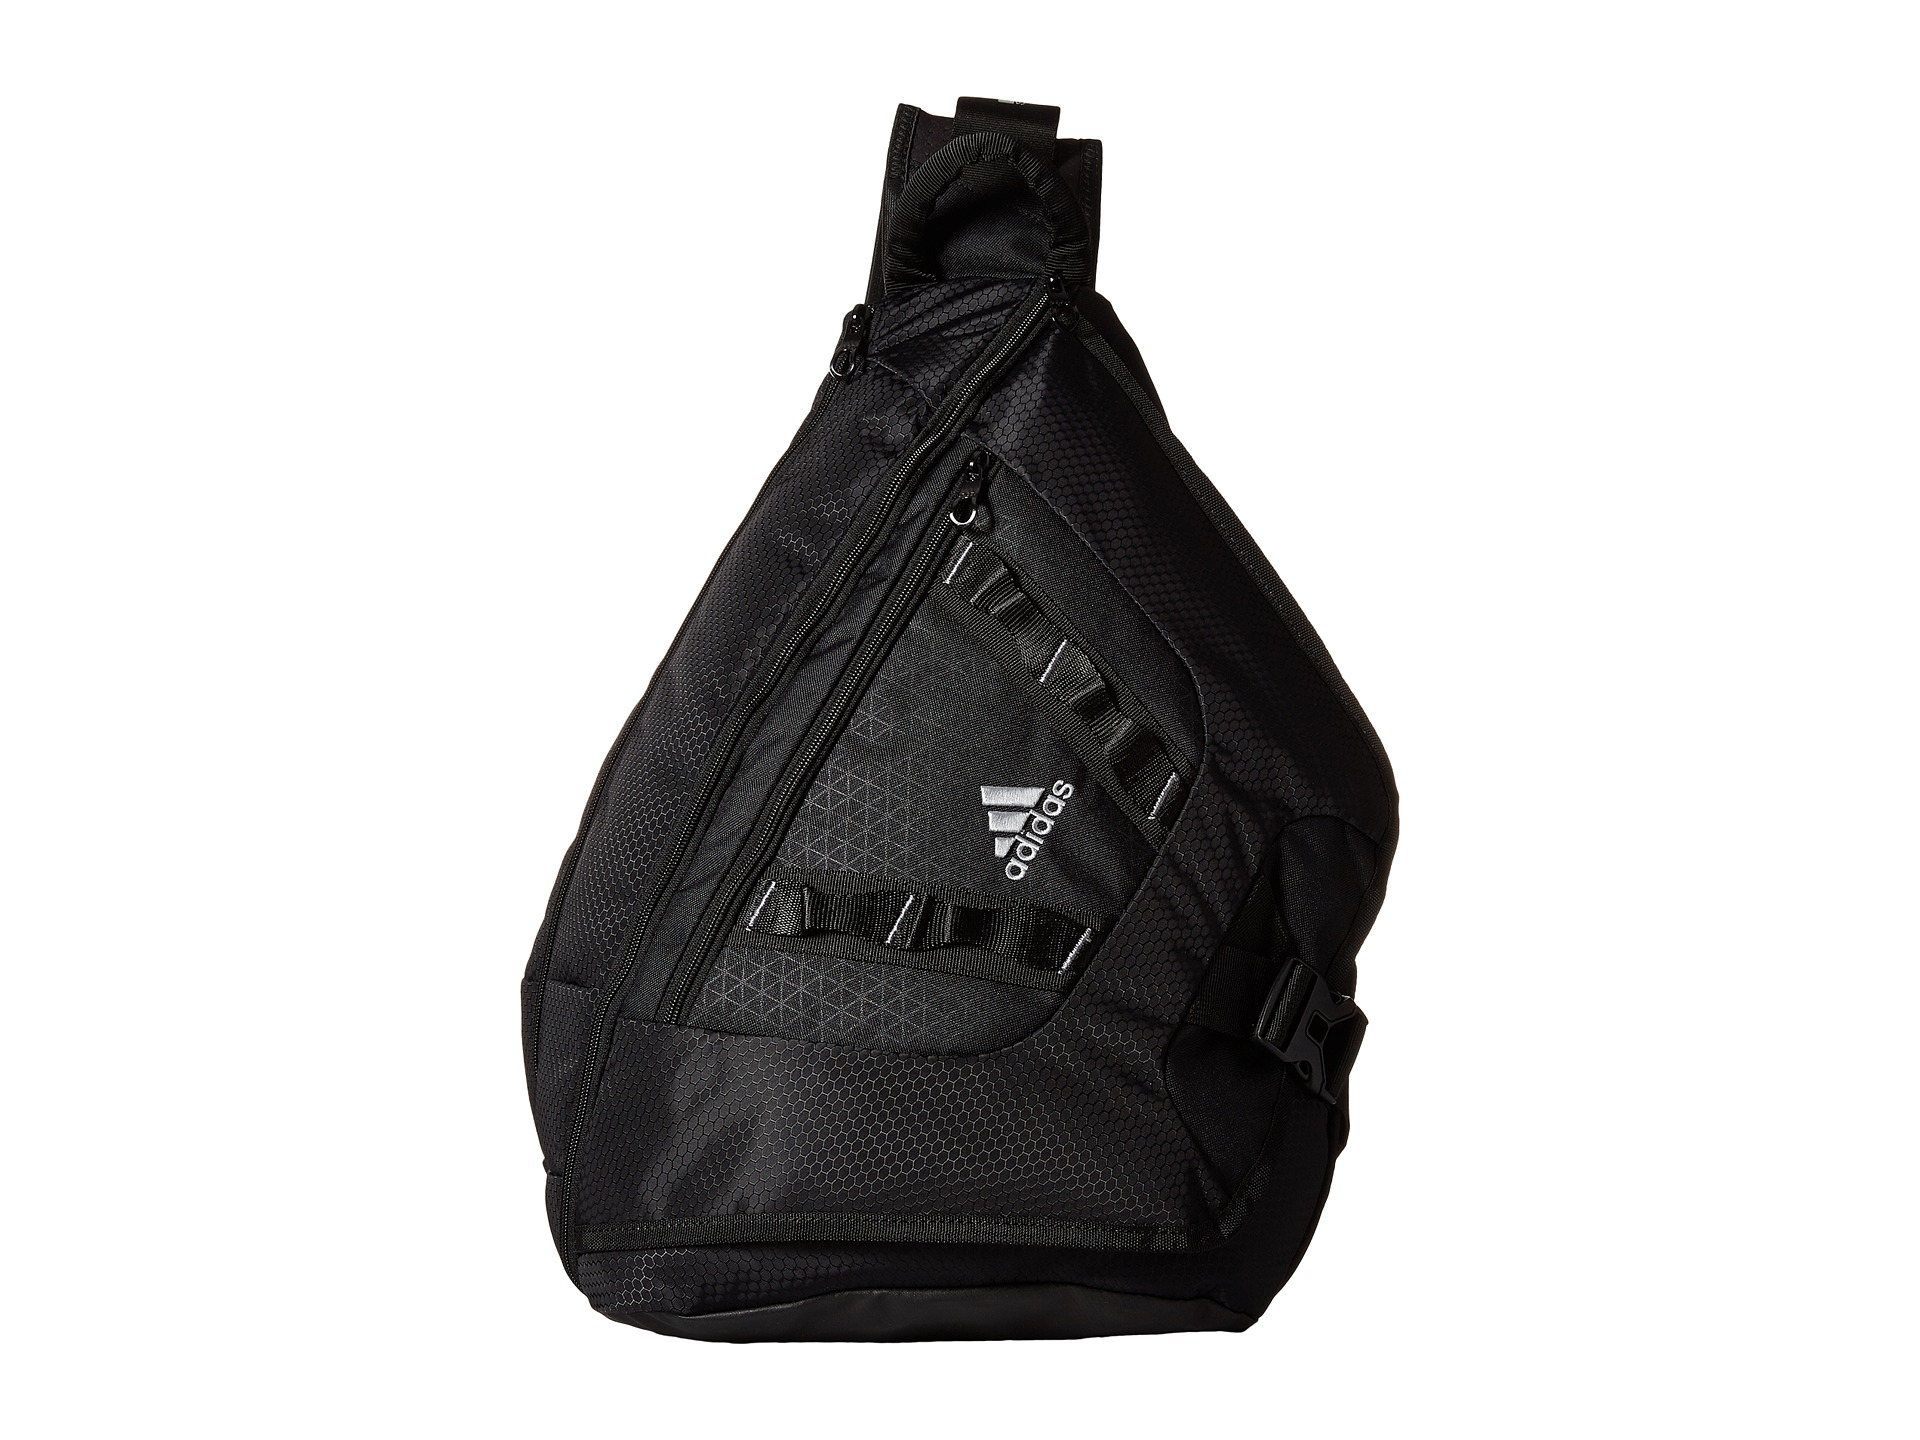 adidas single strap backpack